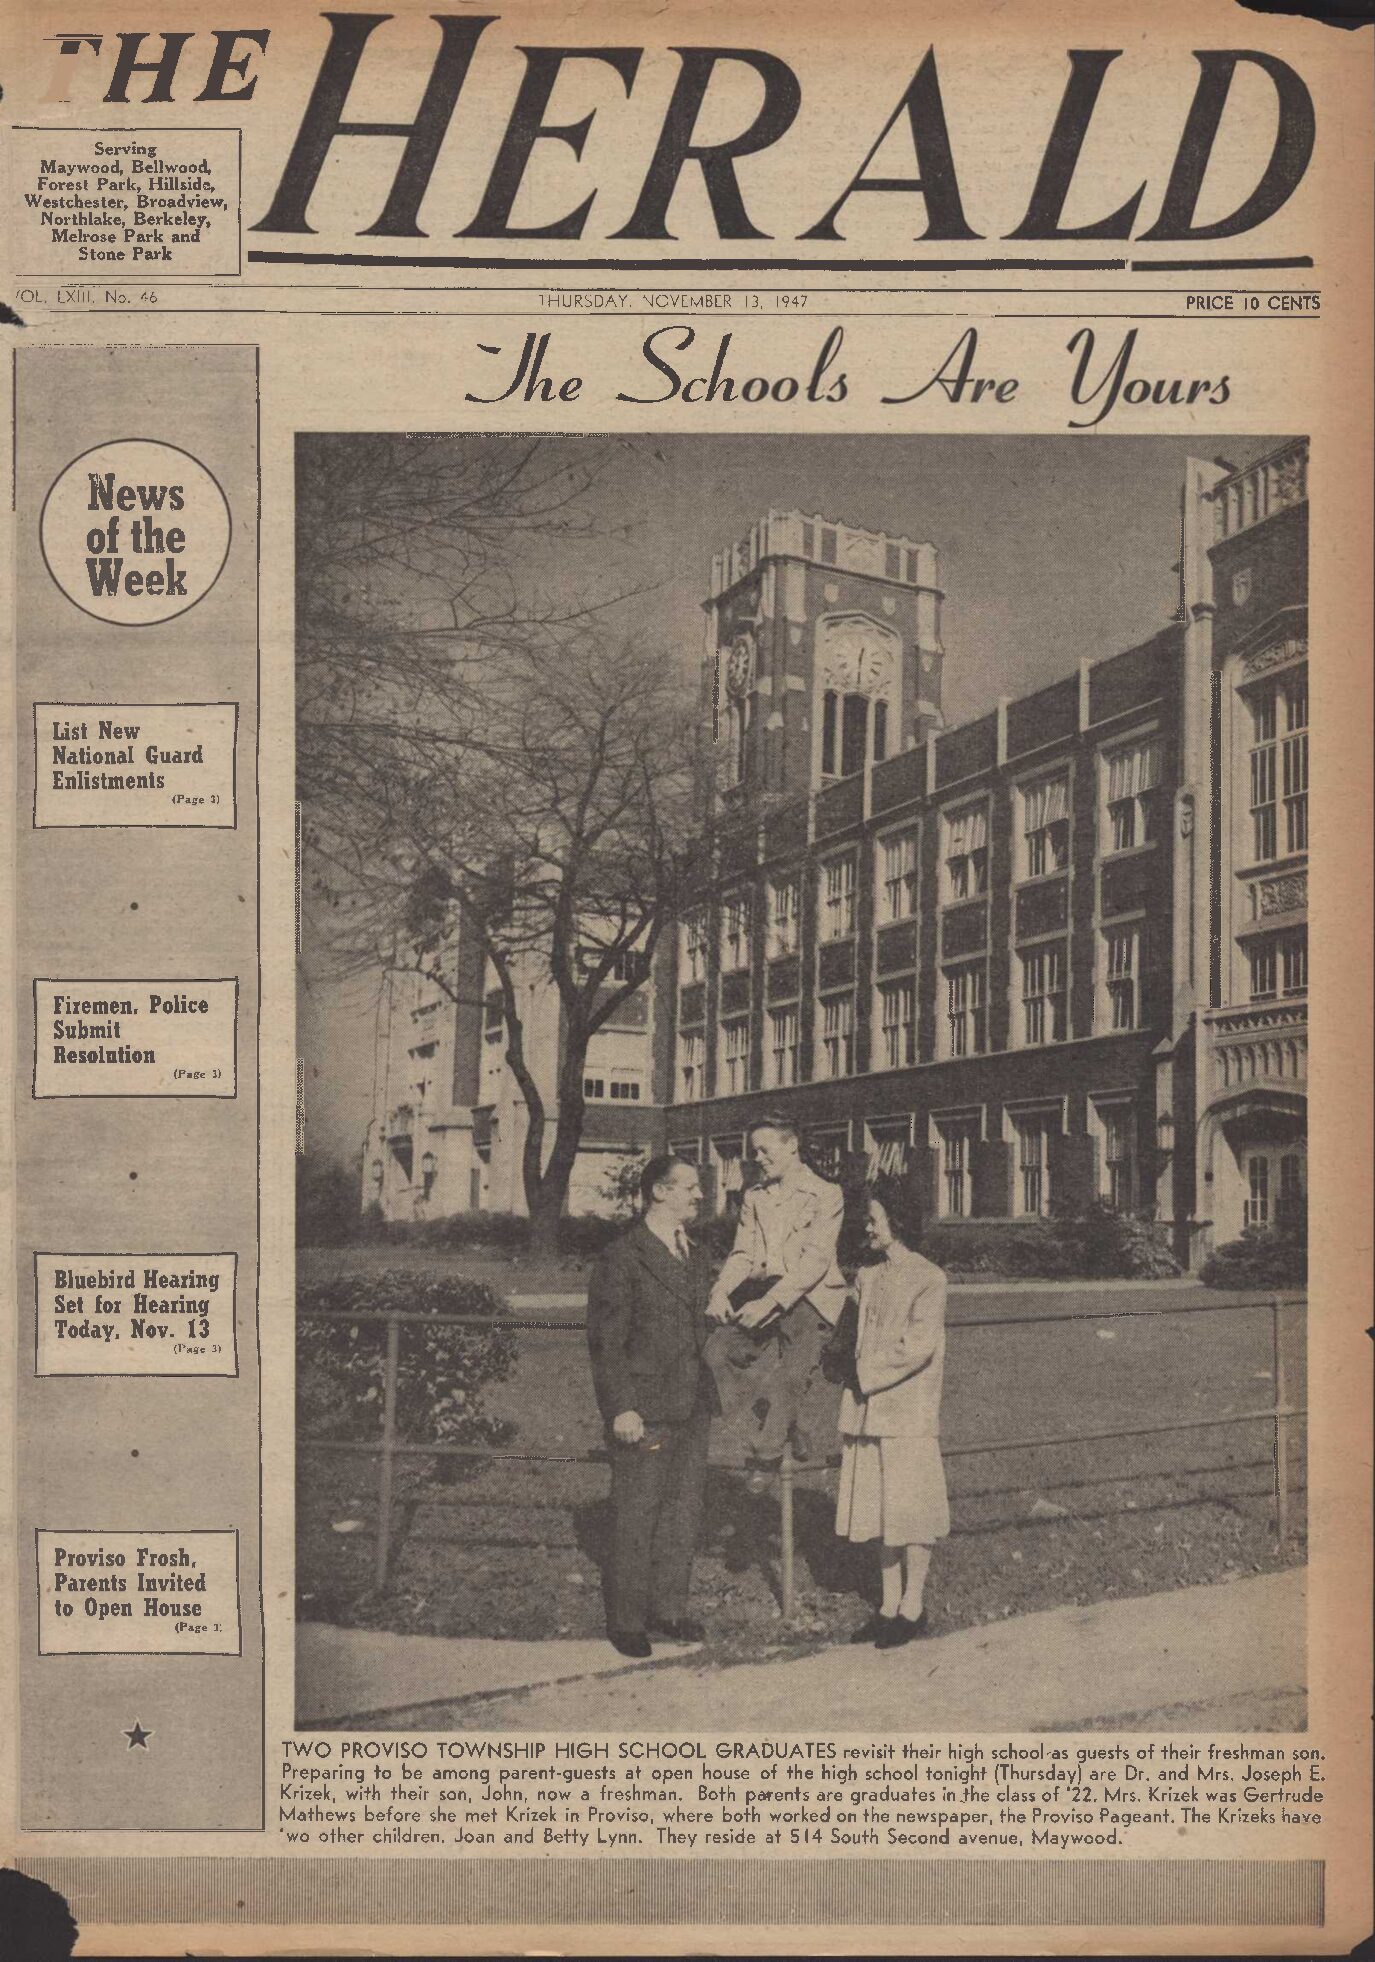 The Herald – 19471113